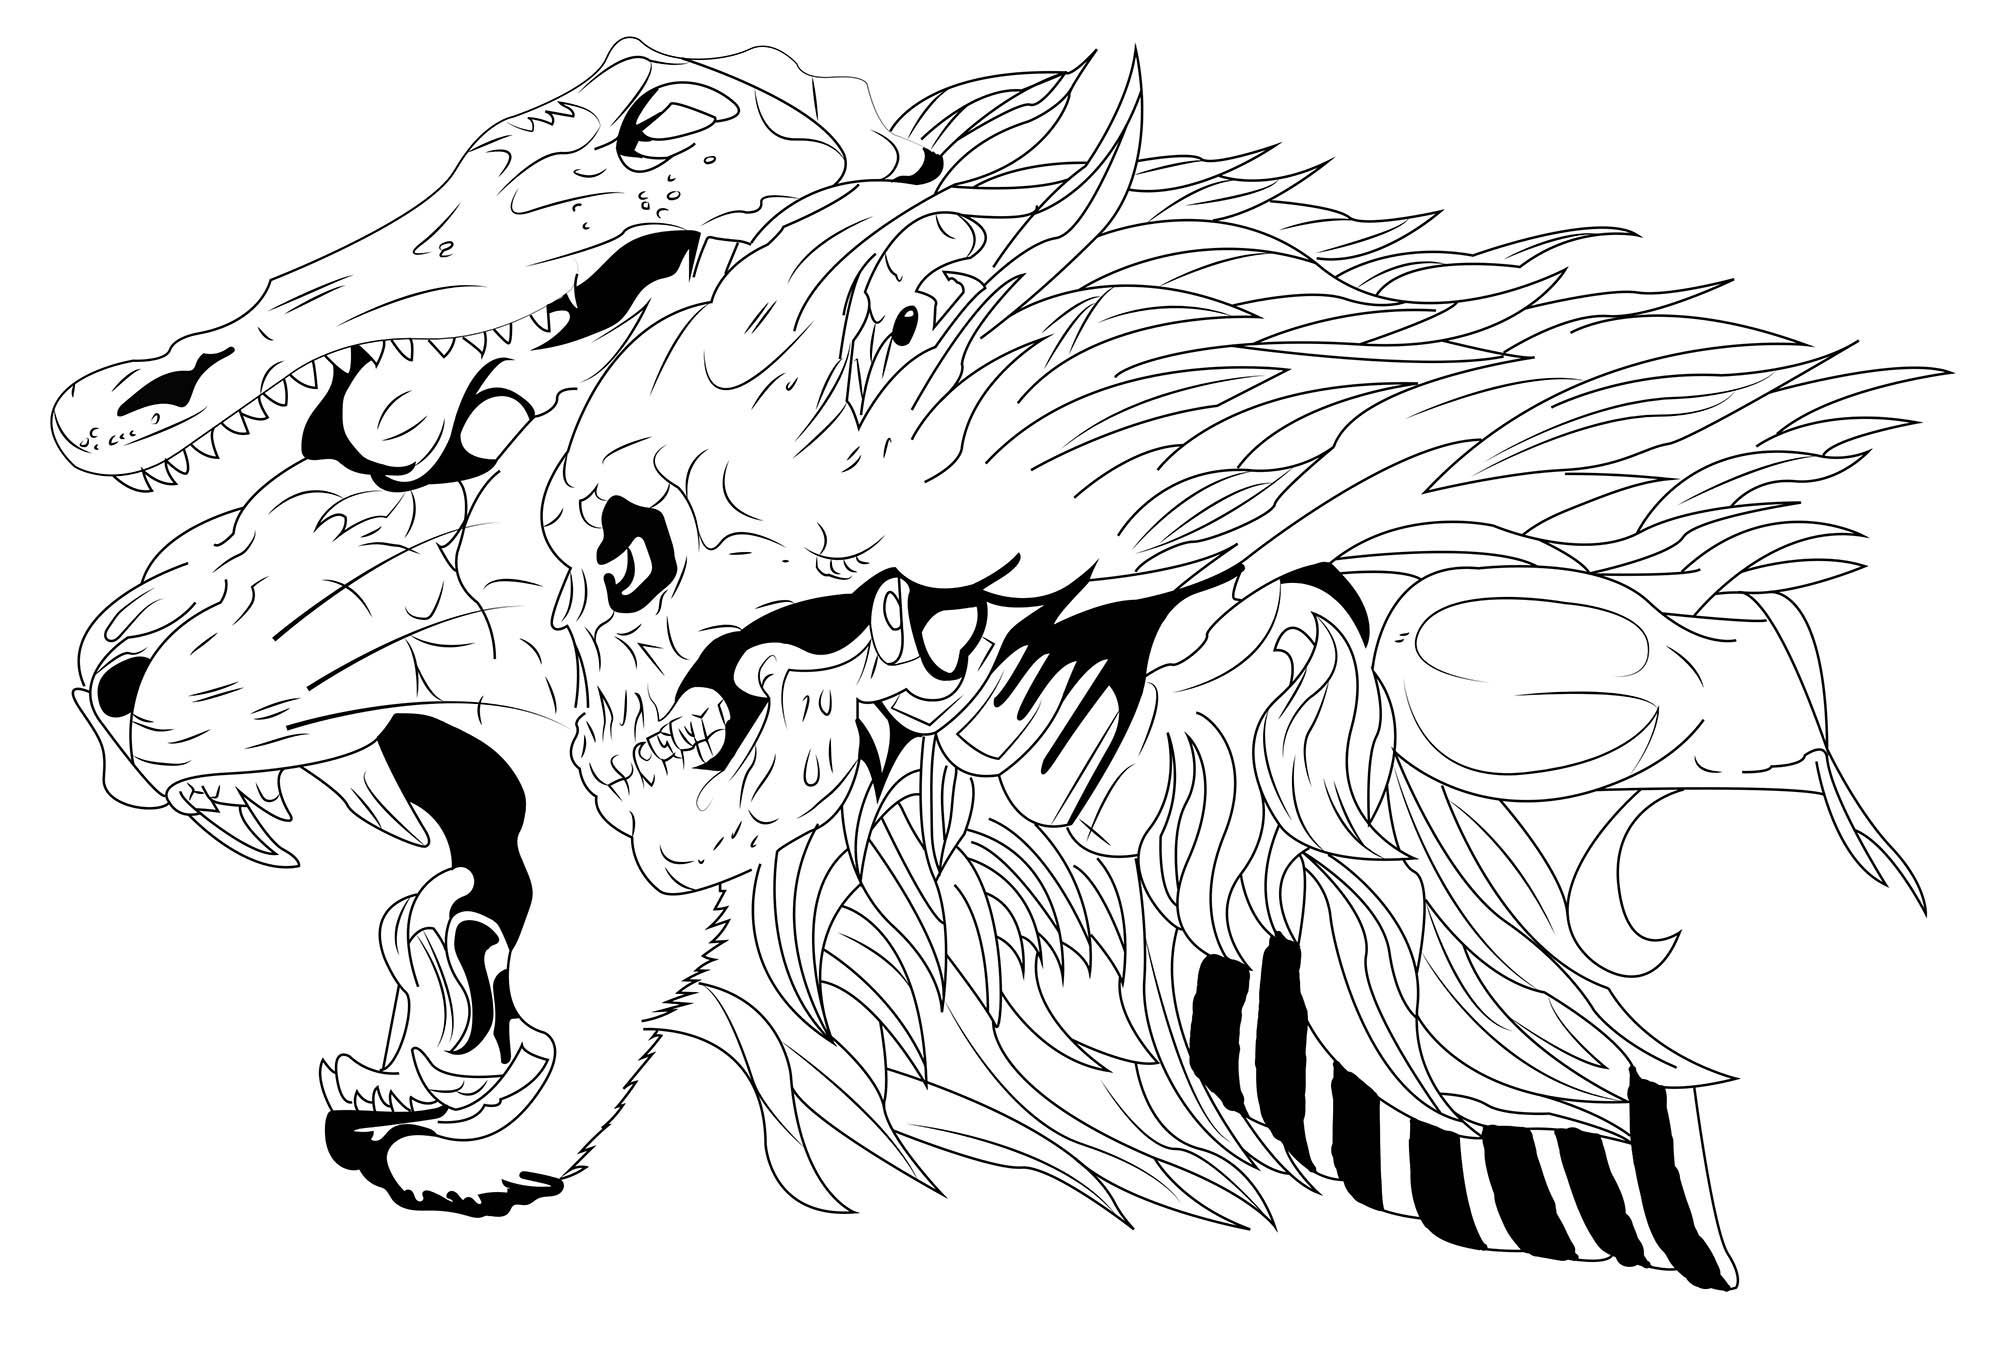 Lion, crocodile and skull, Artist : Caillou